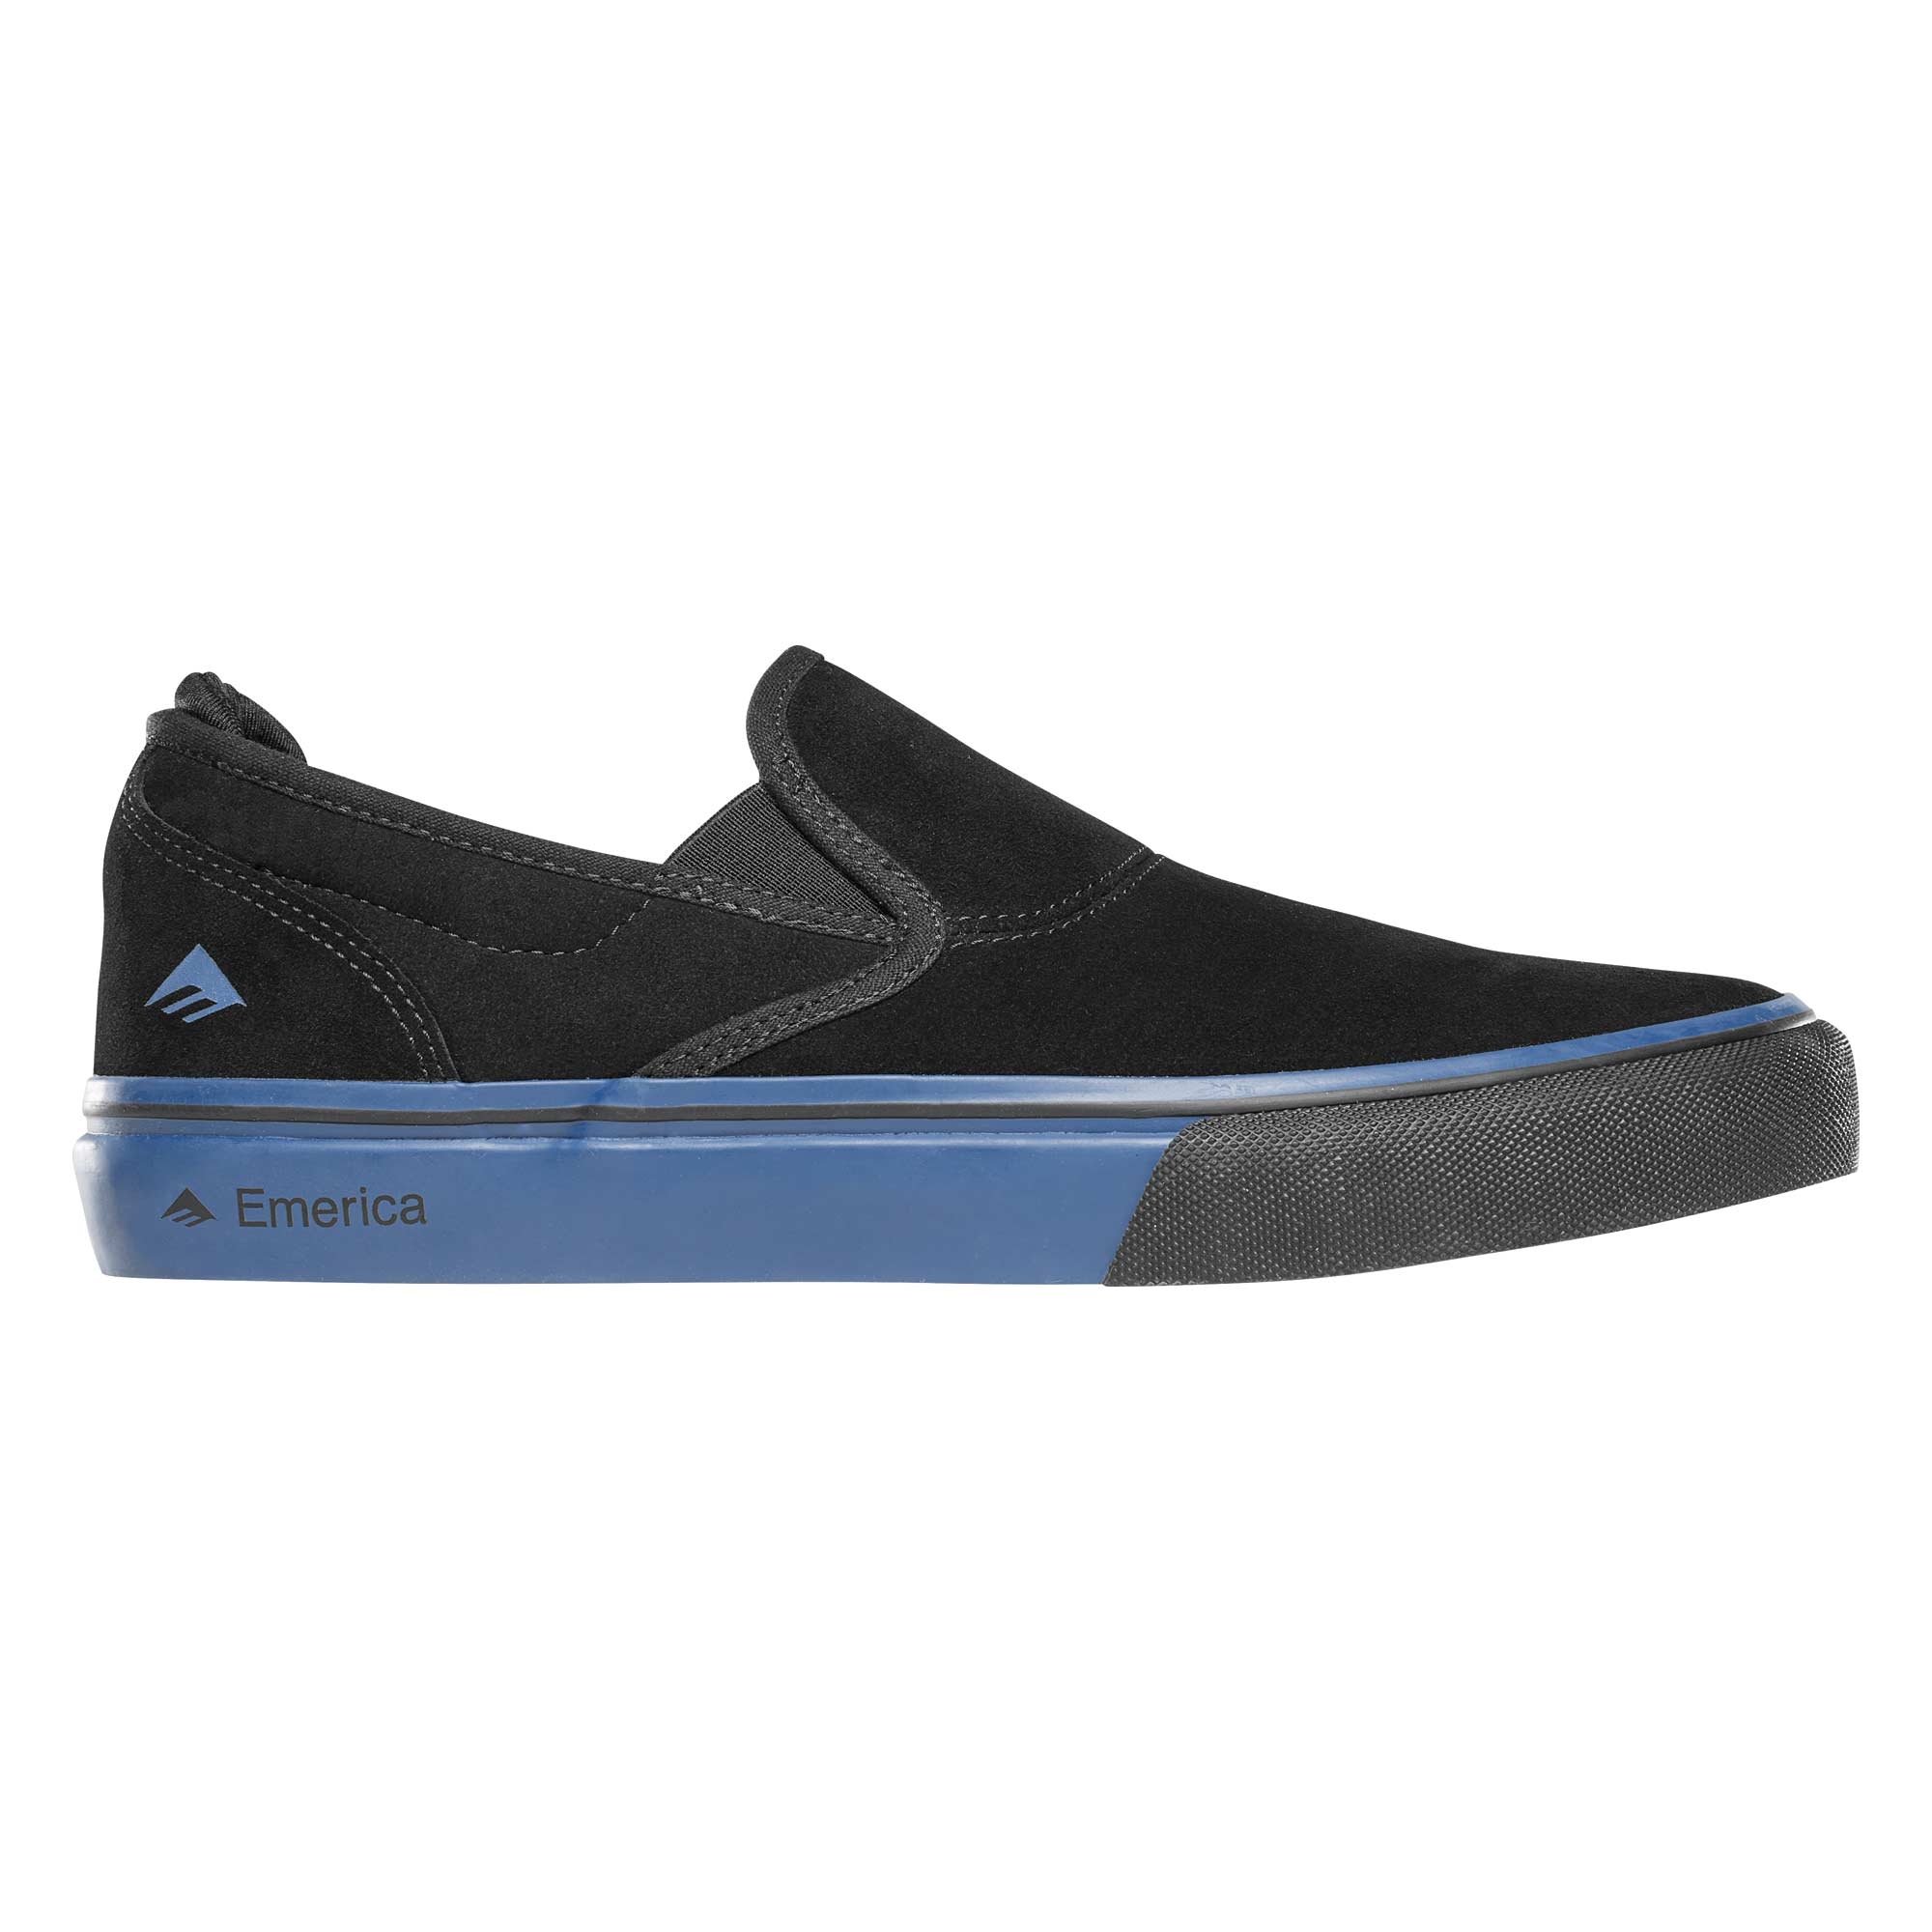 EMERICA Shoe WINO G6 SLIP-ON bla/blu/bla black/blue/black